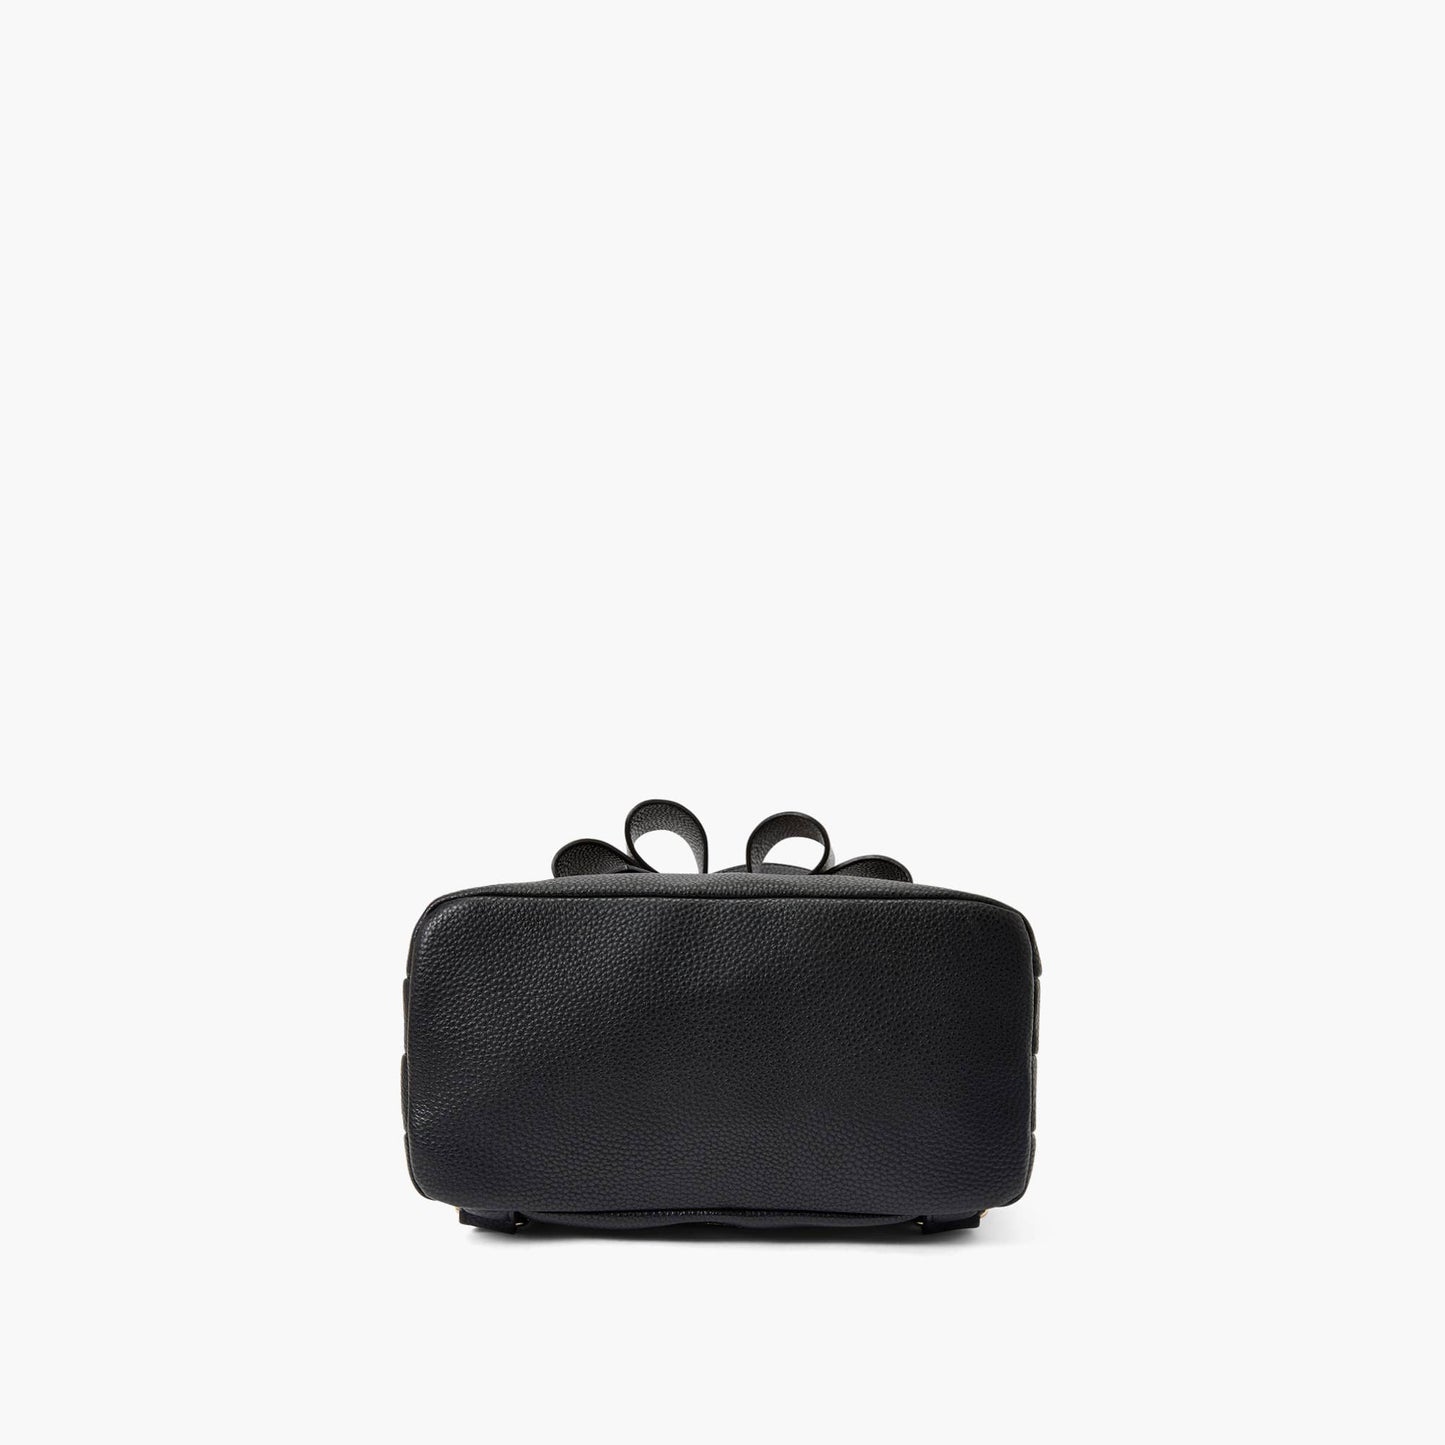 Jasmine Bowtie Backpack Handbag: Black